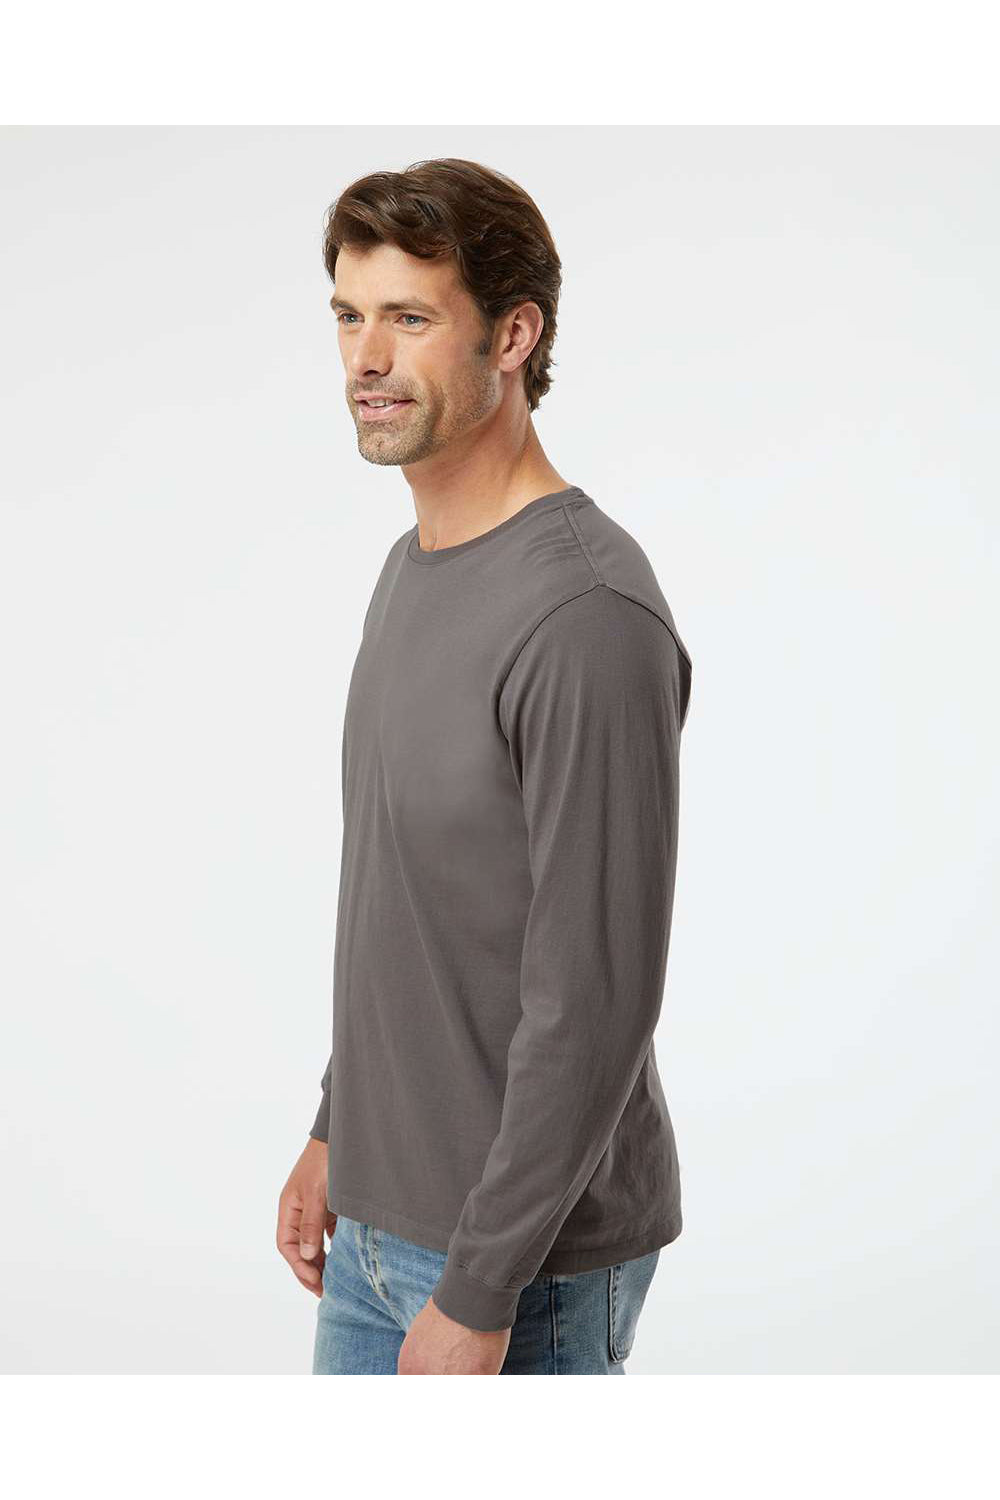 SoftShirts 420 Mens Organic Long Sleeve Crewneck T-Shirt Graphite Grey Model Side